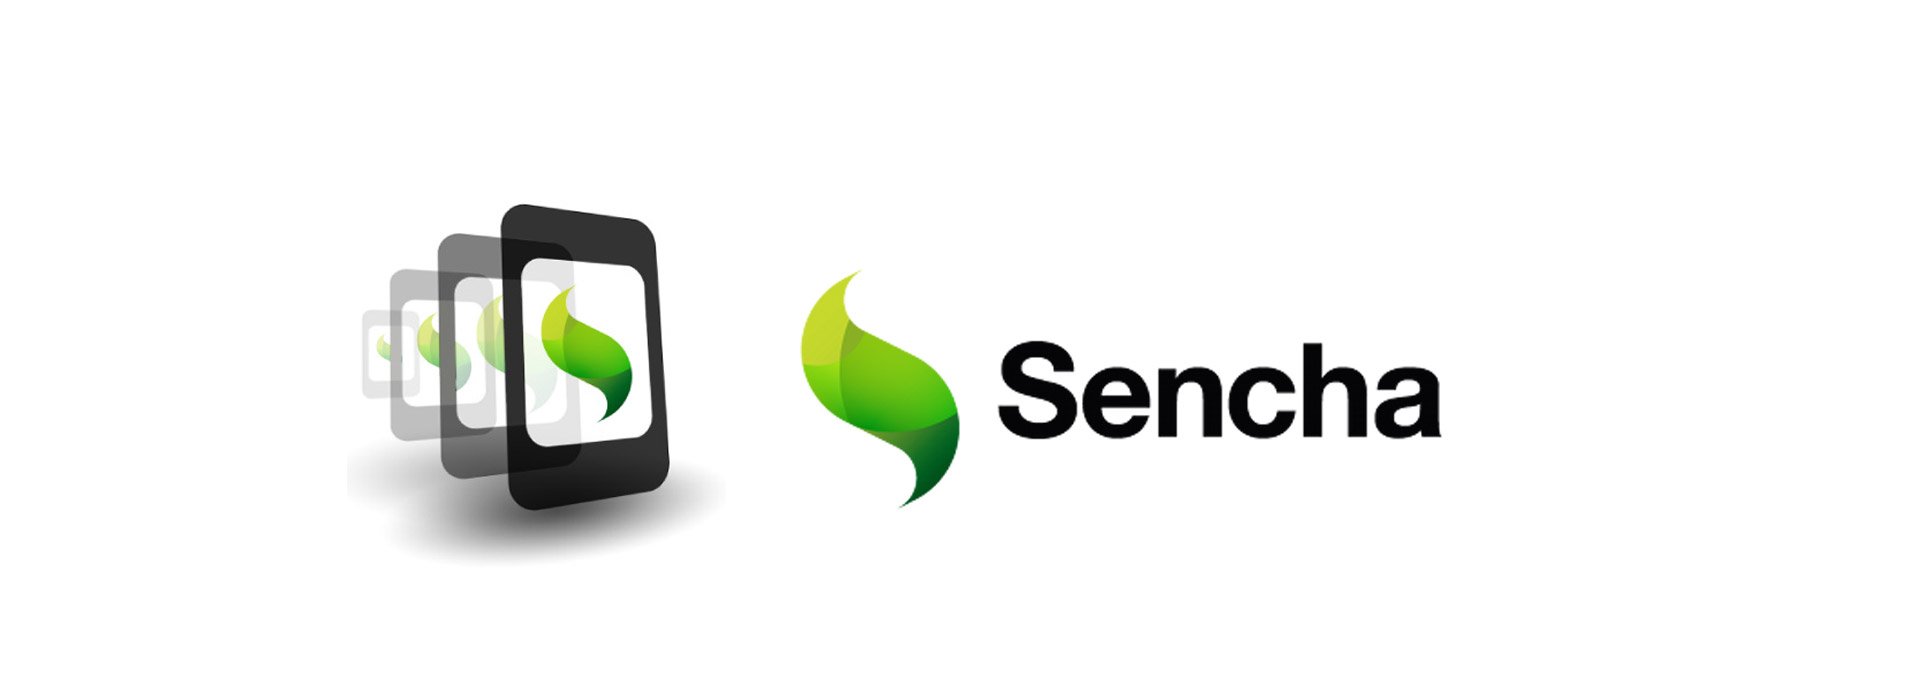 Top best mobile app development platforms: Sencha